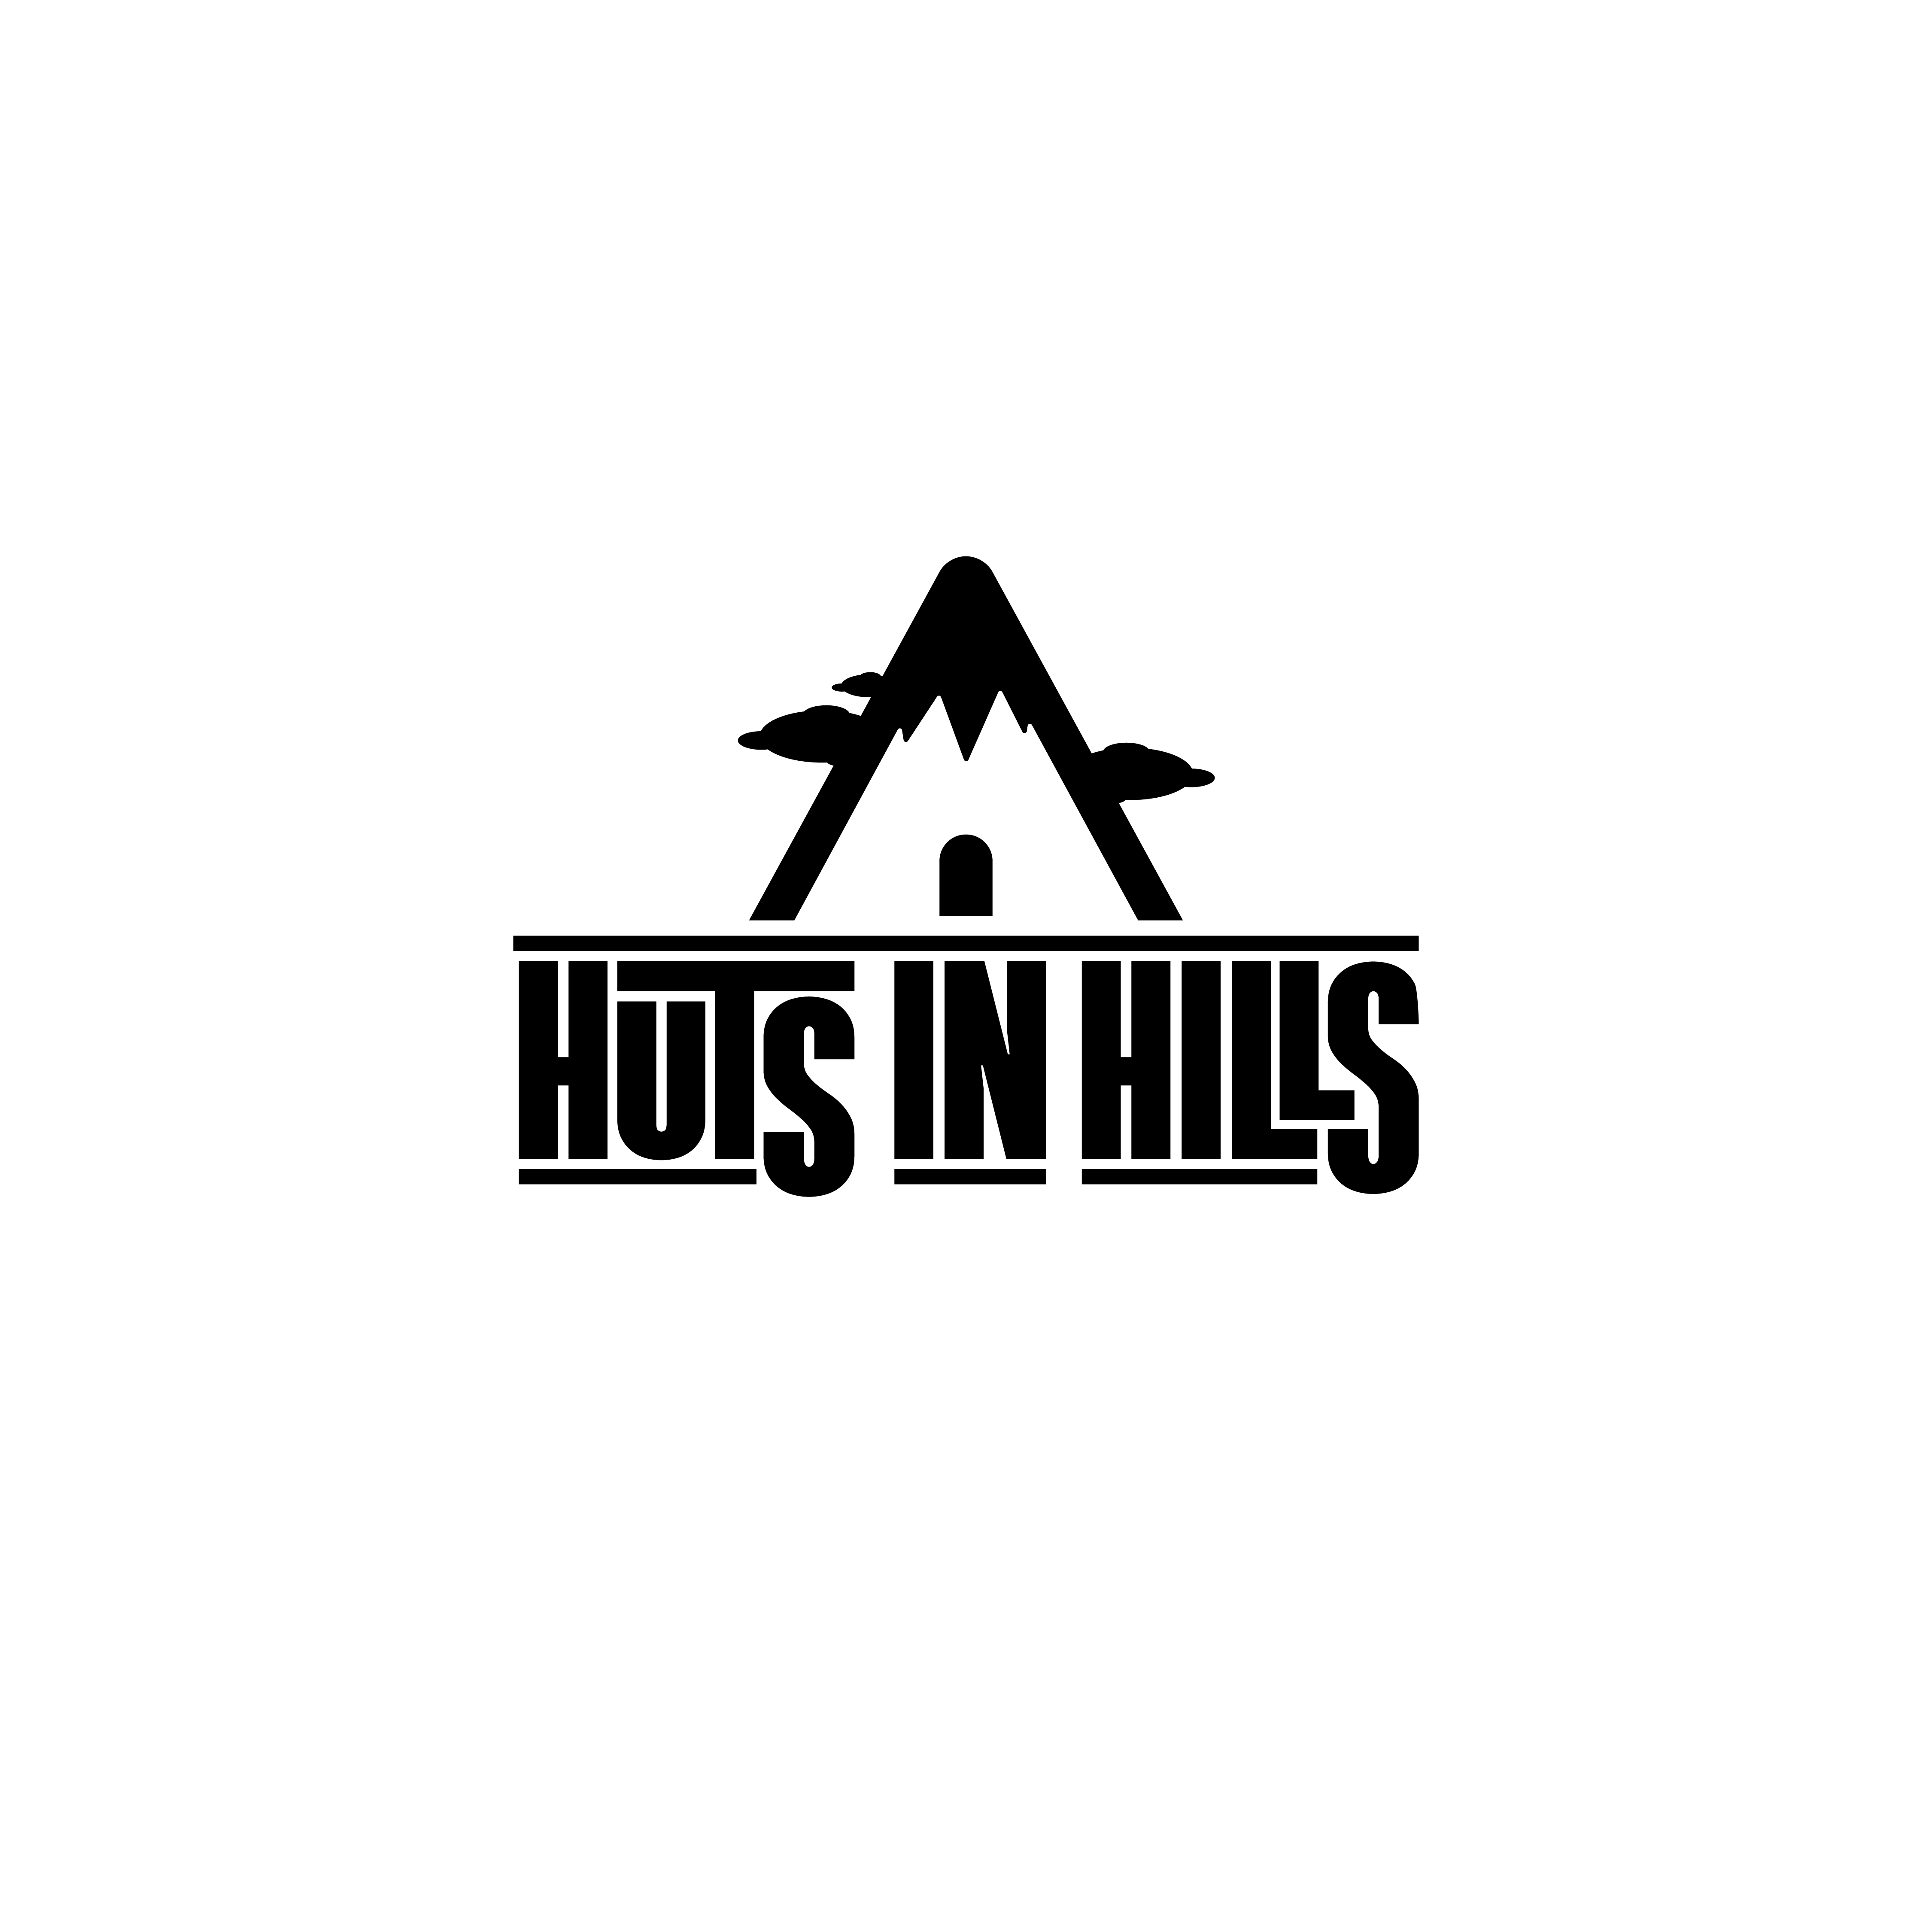 Huts In Hills